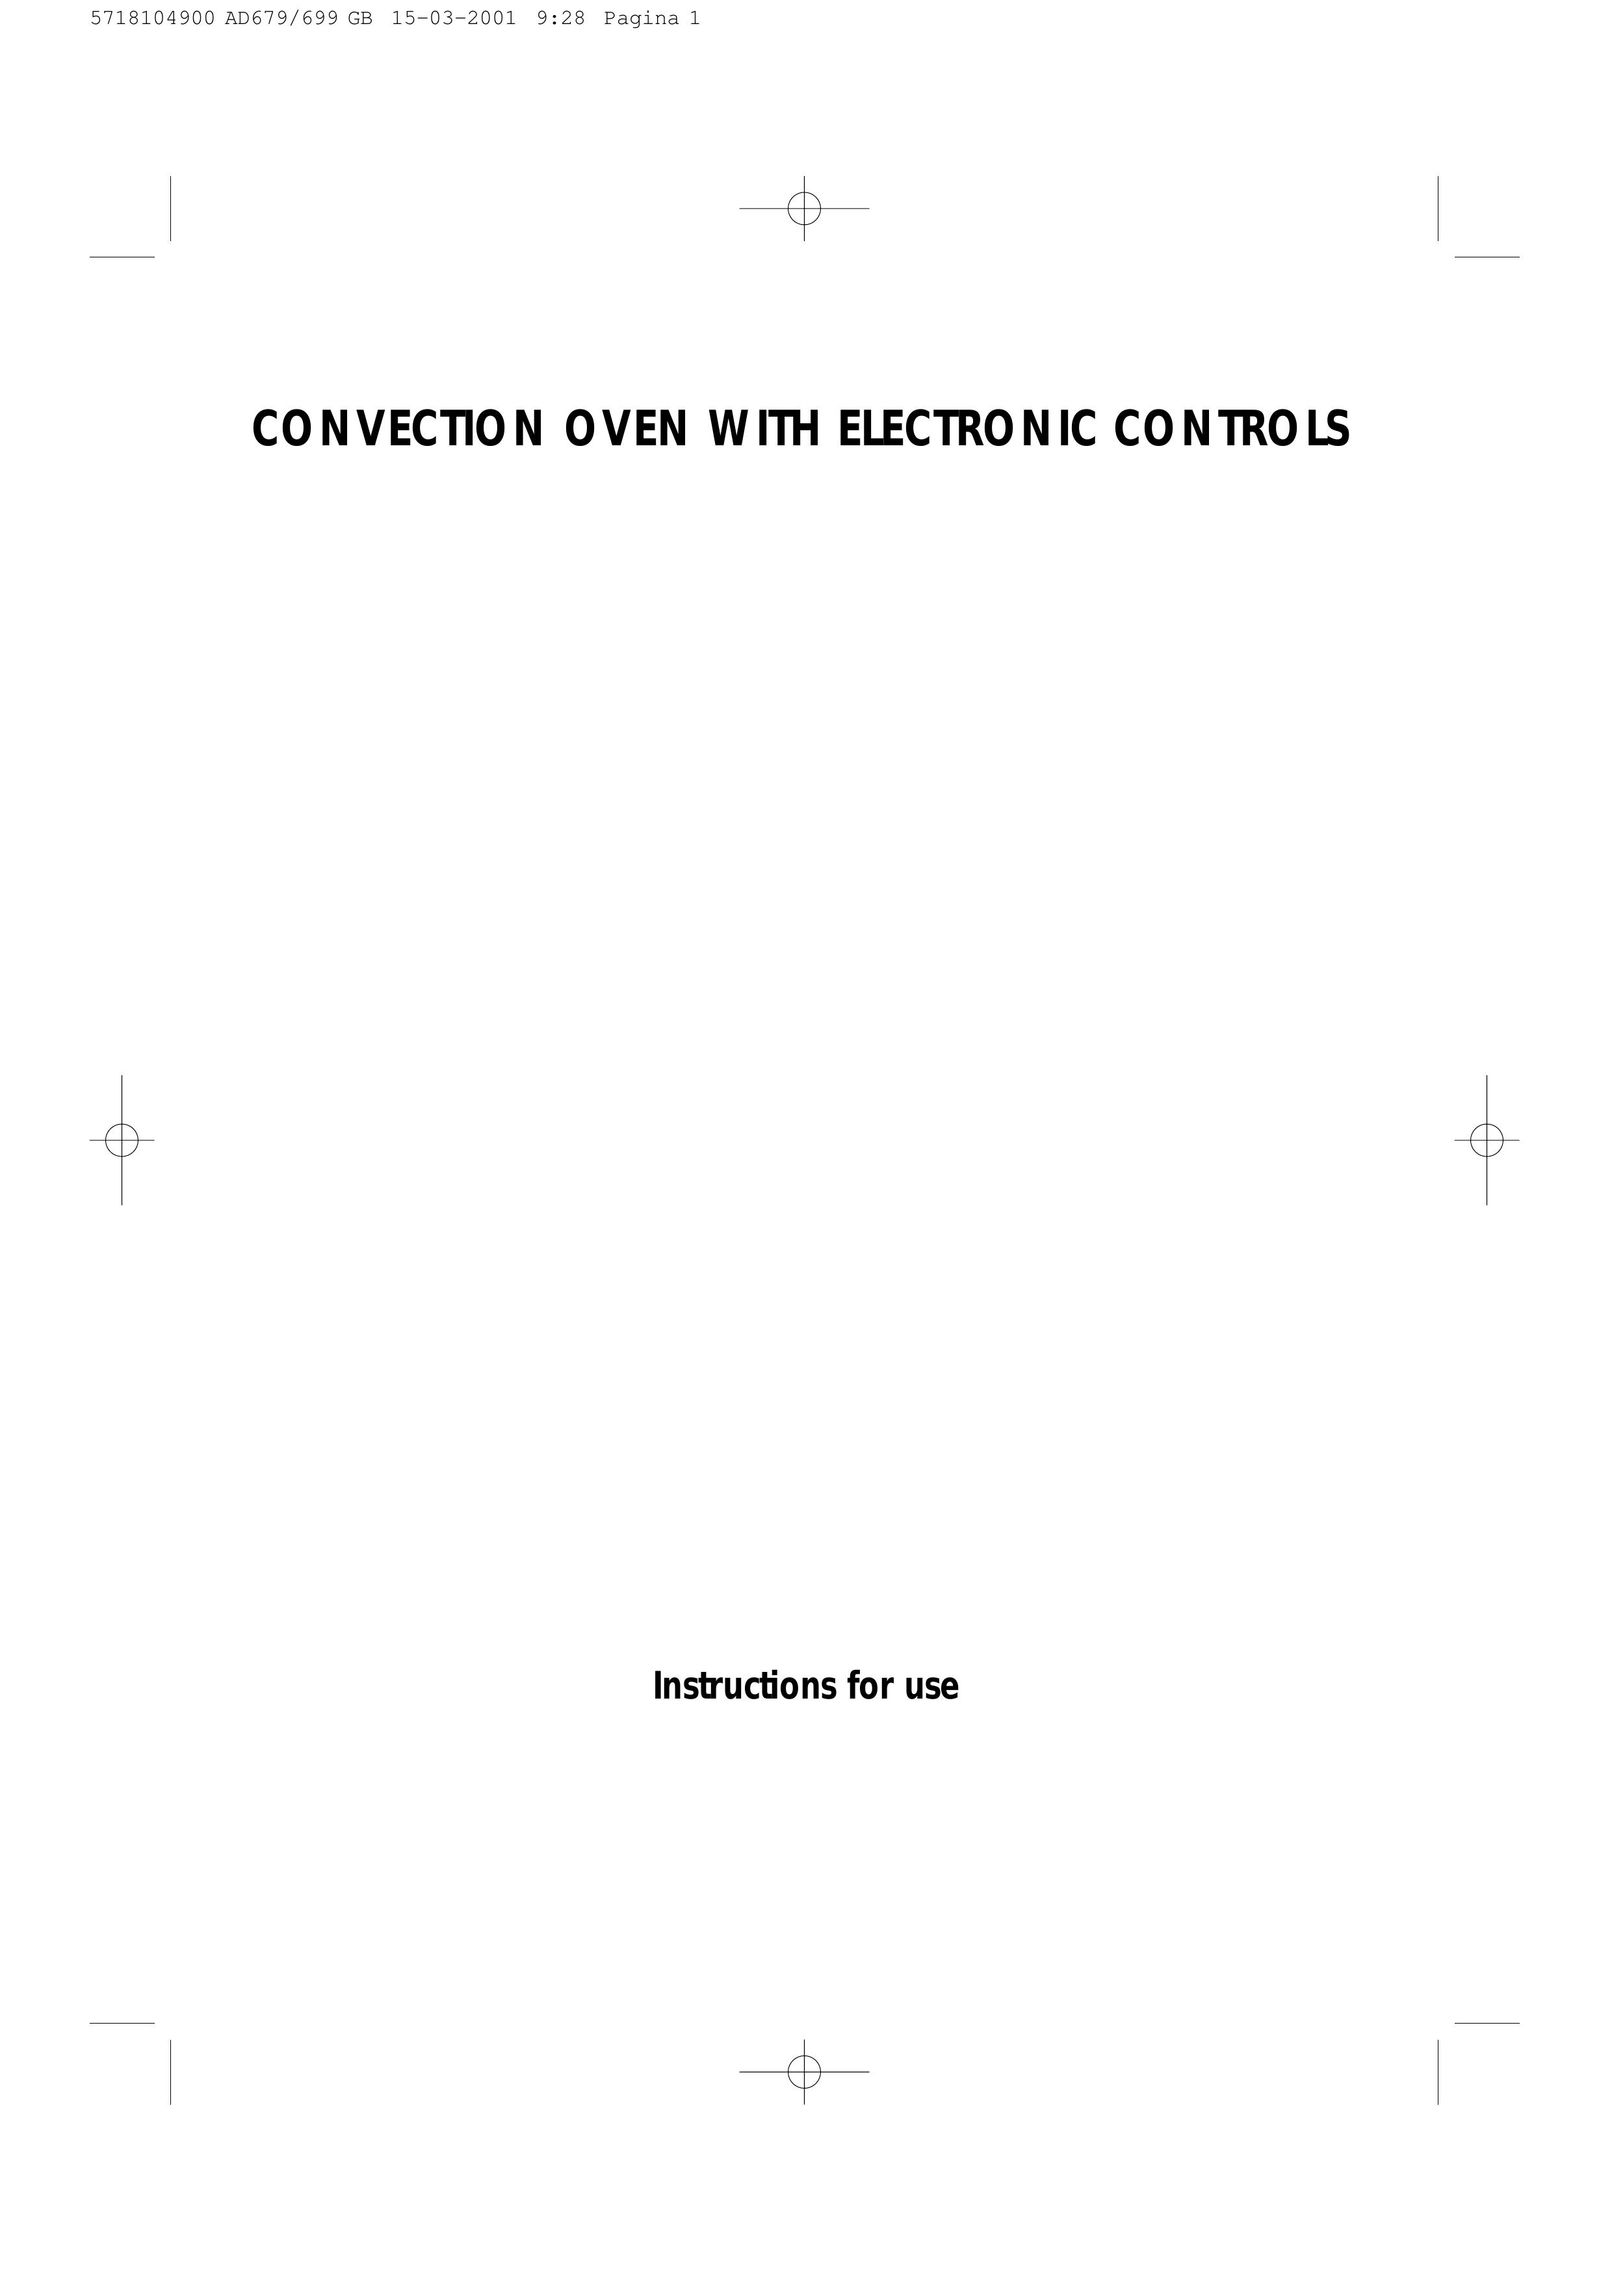 DeLonghi AD679/699 Convection Oven User Manual